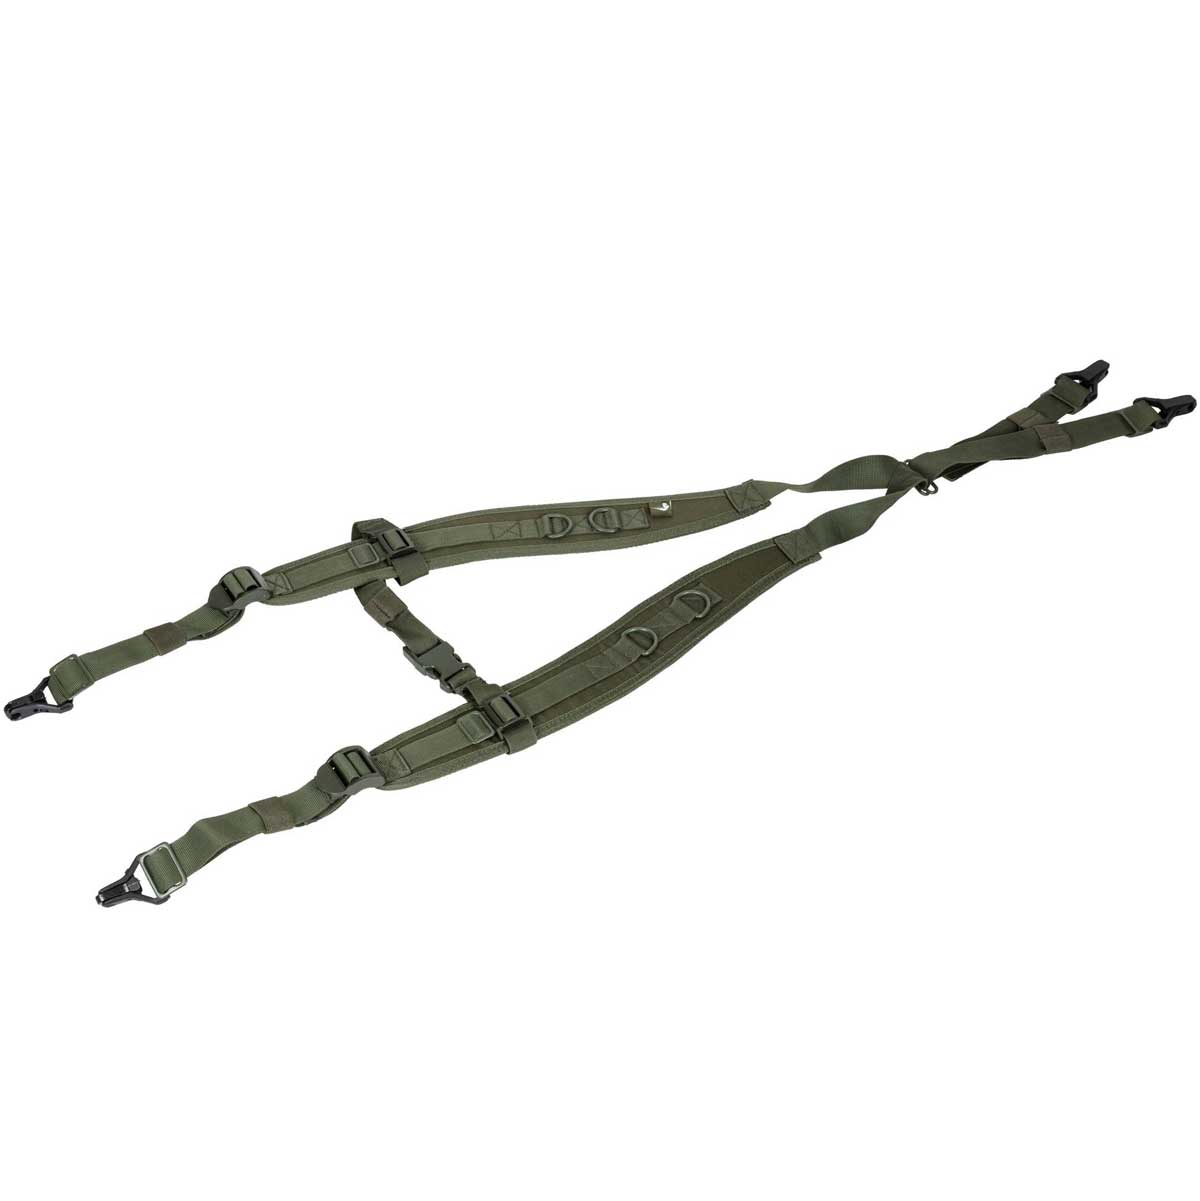 Szelki taktyczne Viper Tactical LH - Olive